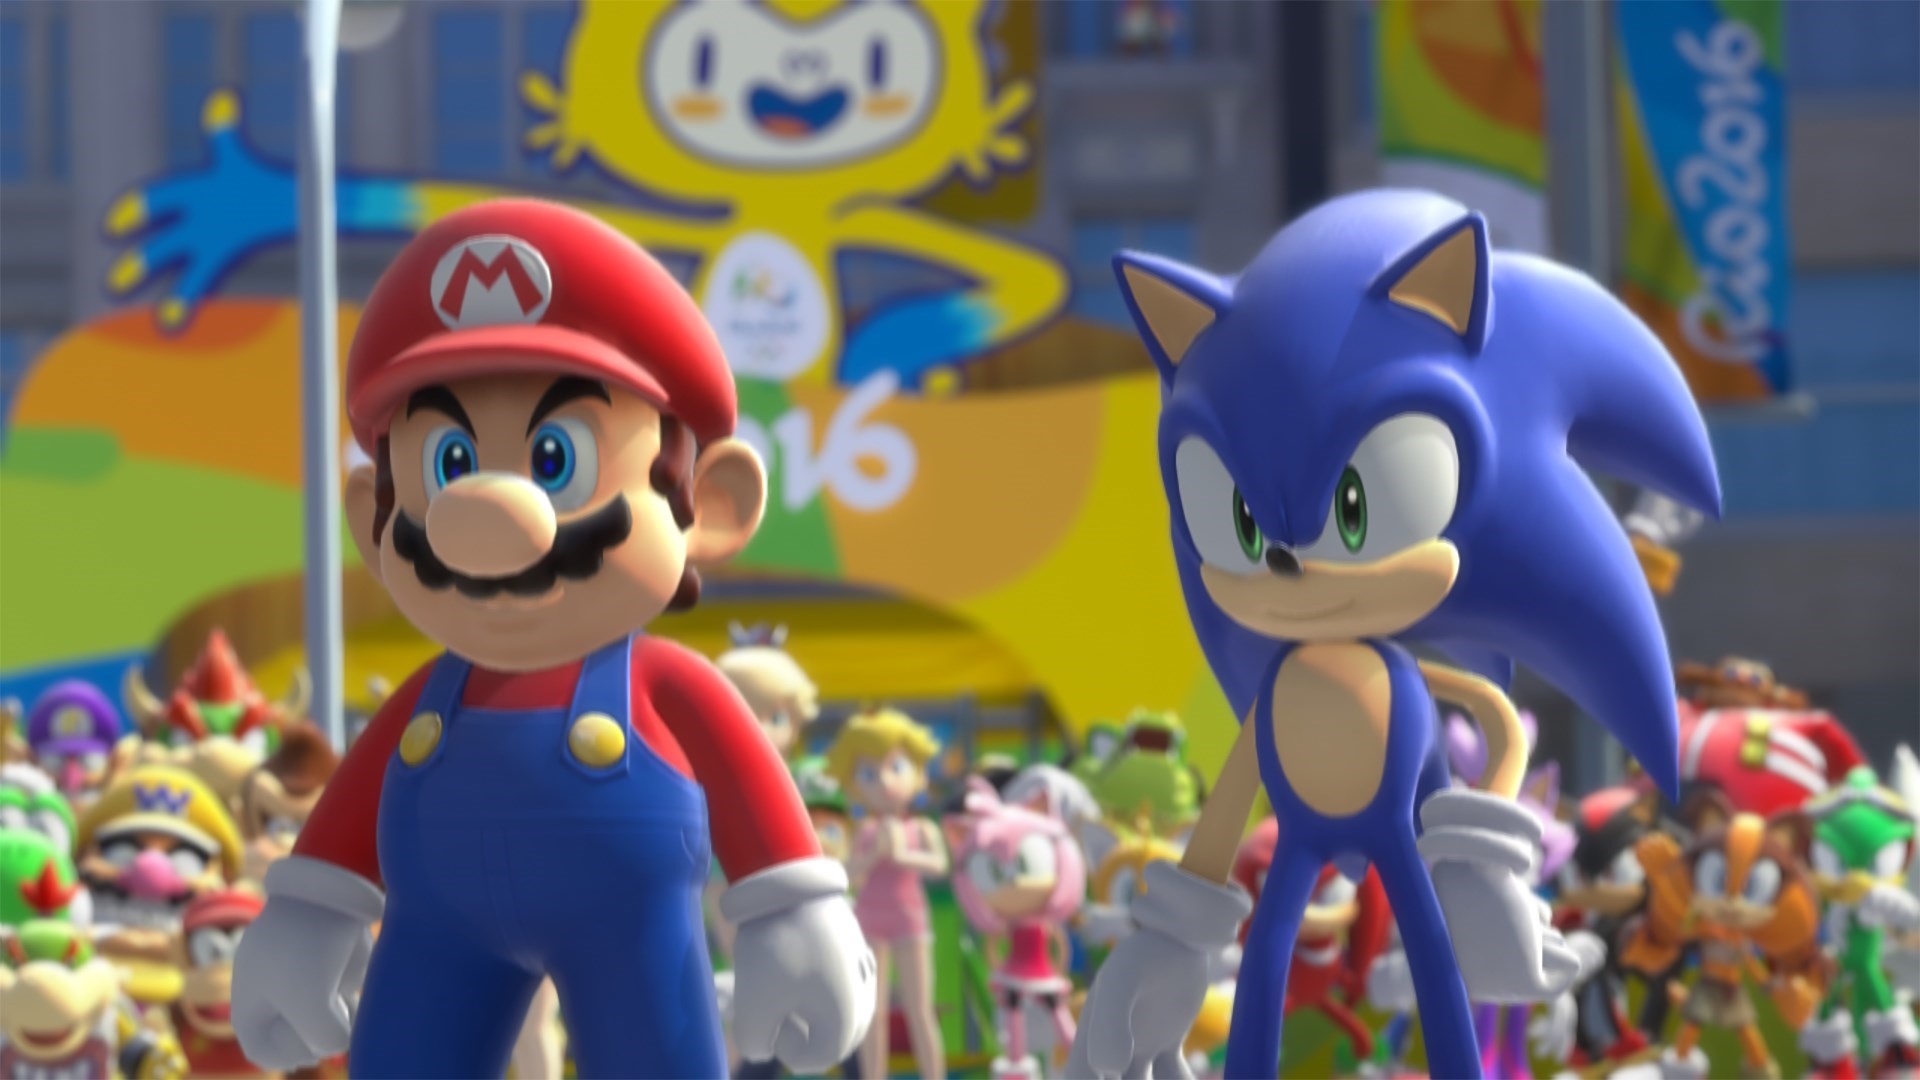 Mario & Sonic at the Rio 2016 Olympic Games Wii U boxart, screenshots